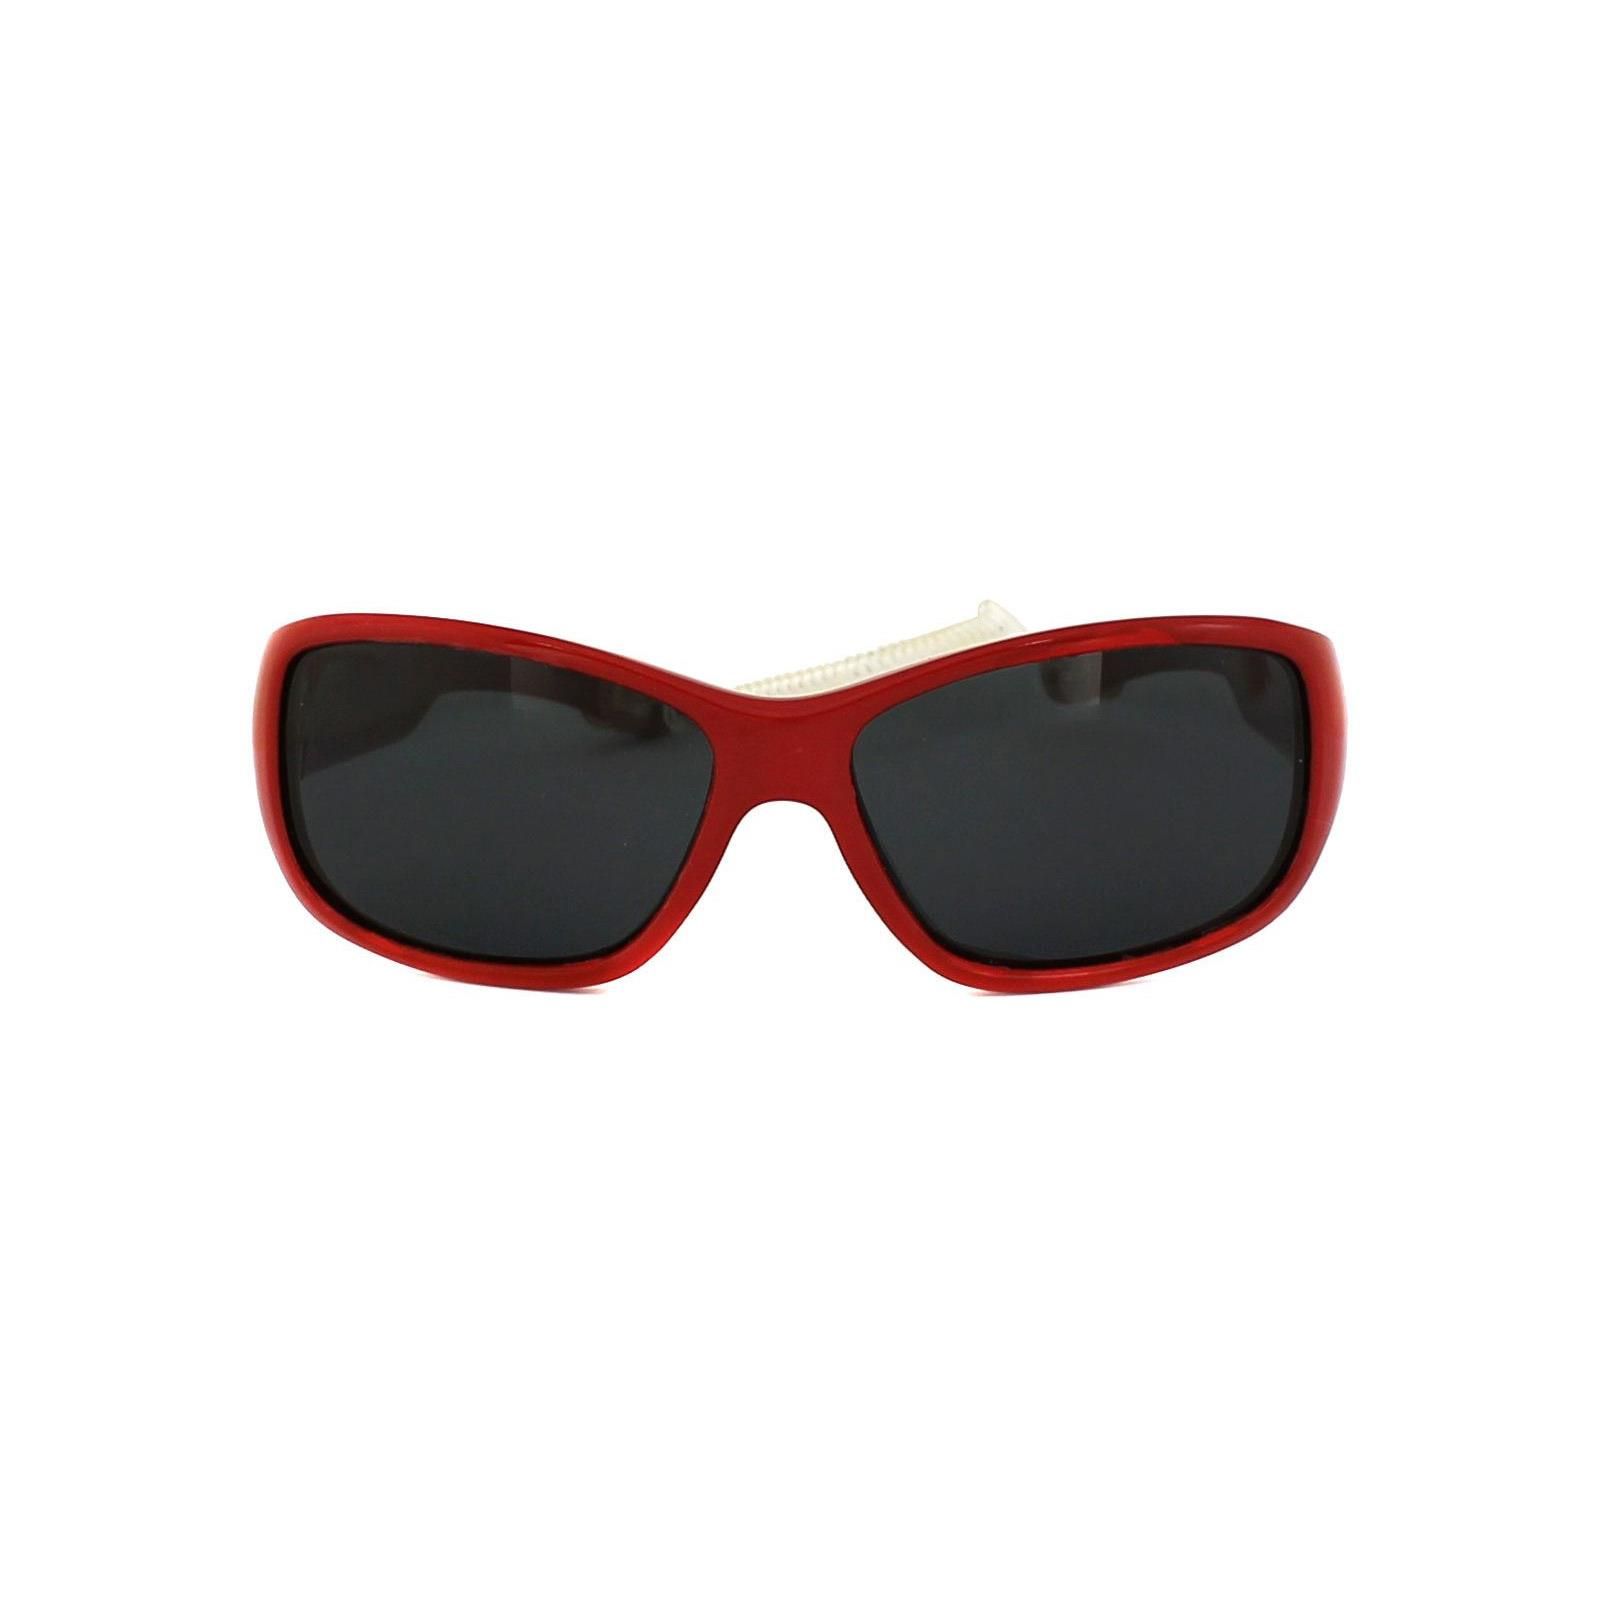 Disney Sunglasses Winnie The Pooh D0101 A Red Black Polarized